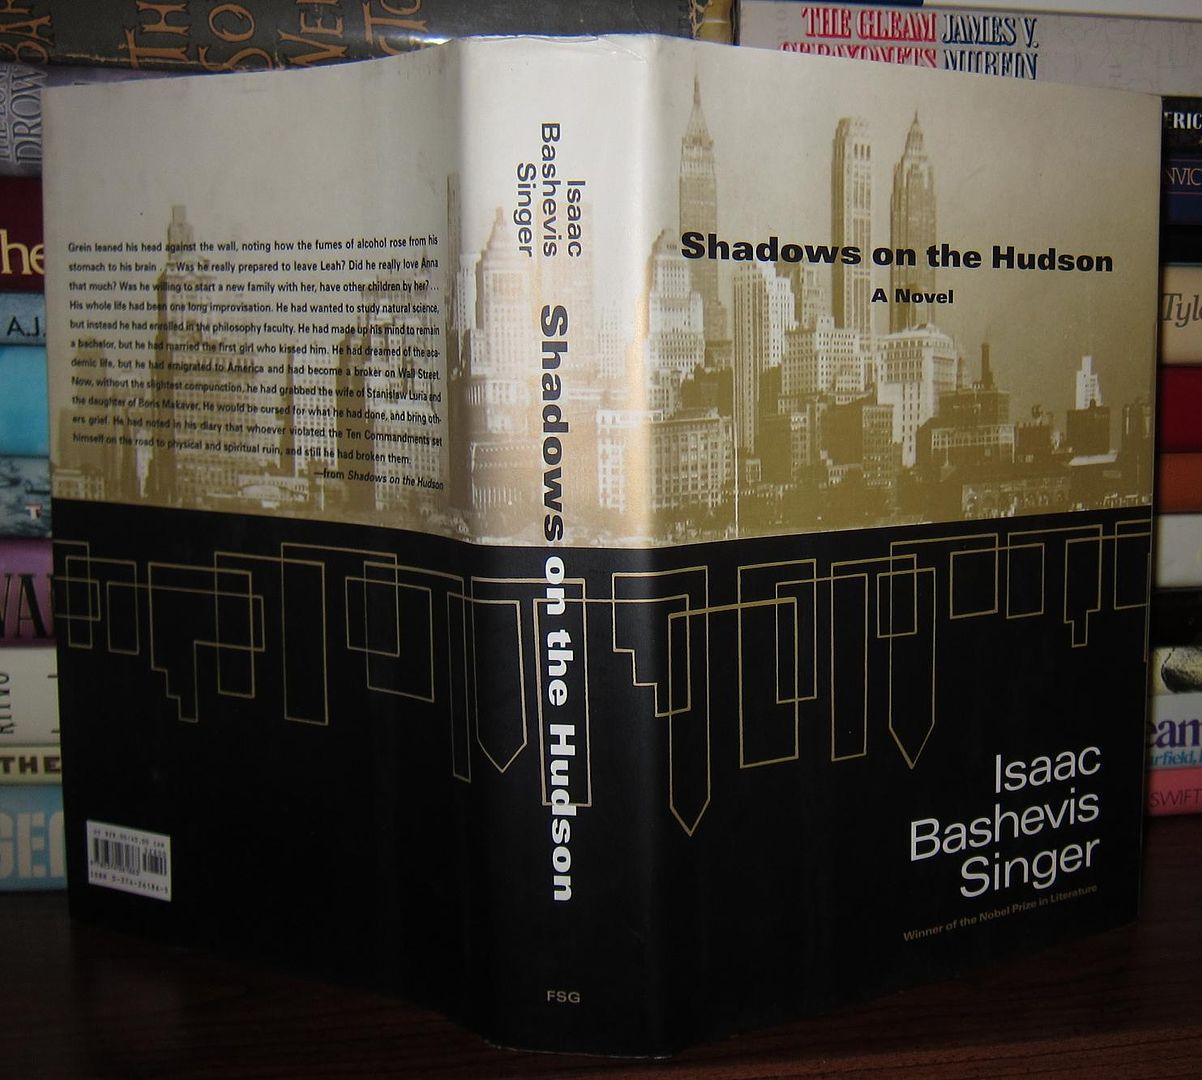 SINGER, ISAAC BASHEVIS - Shadows on the Hudson